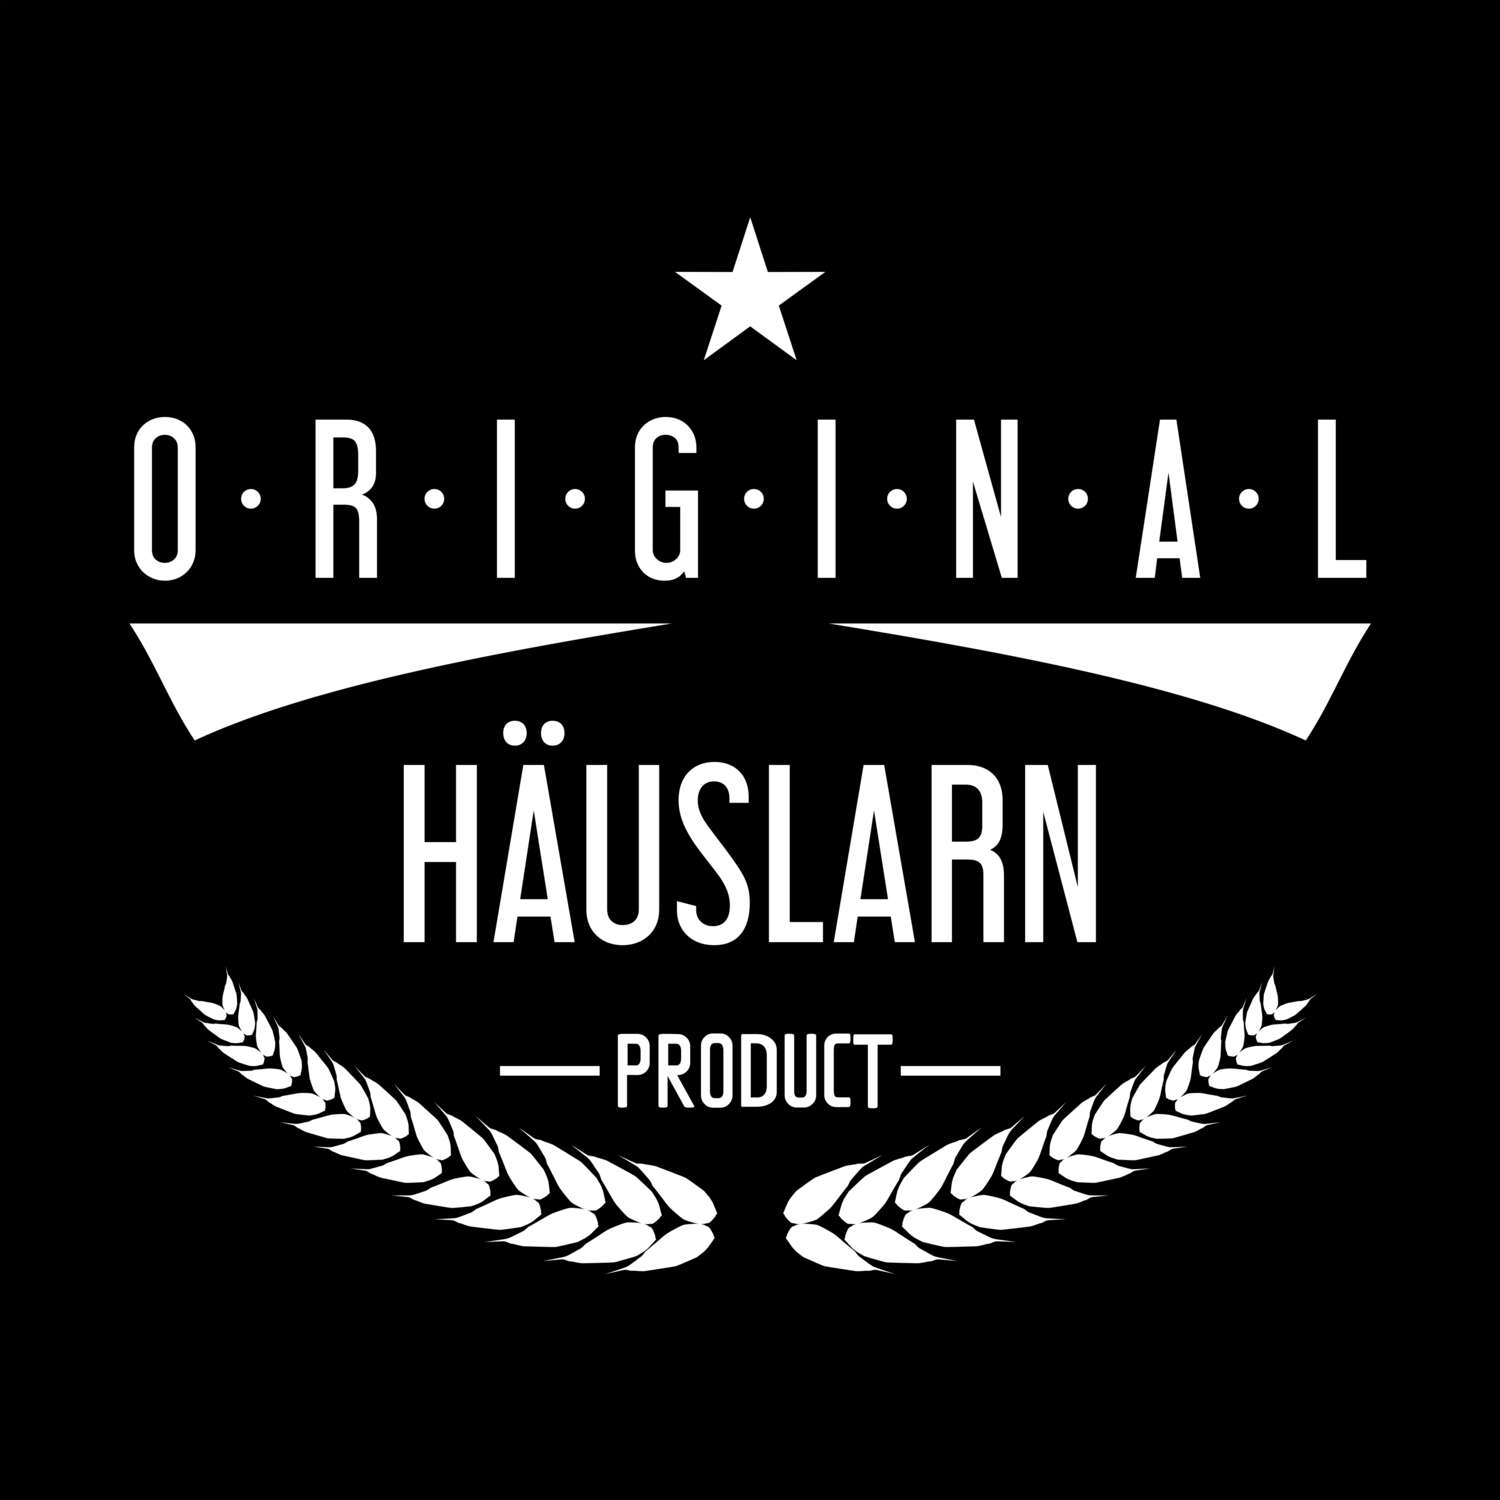 Häuslarn T-Shirt »Original Product«